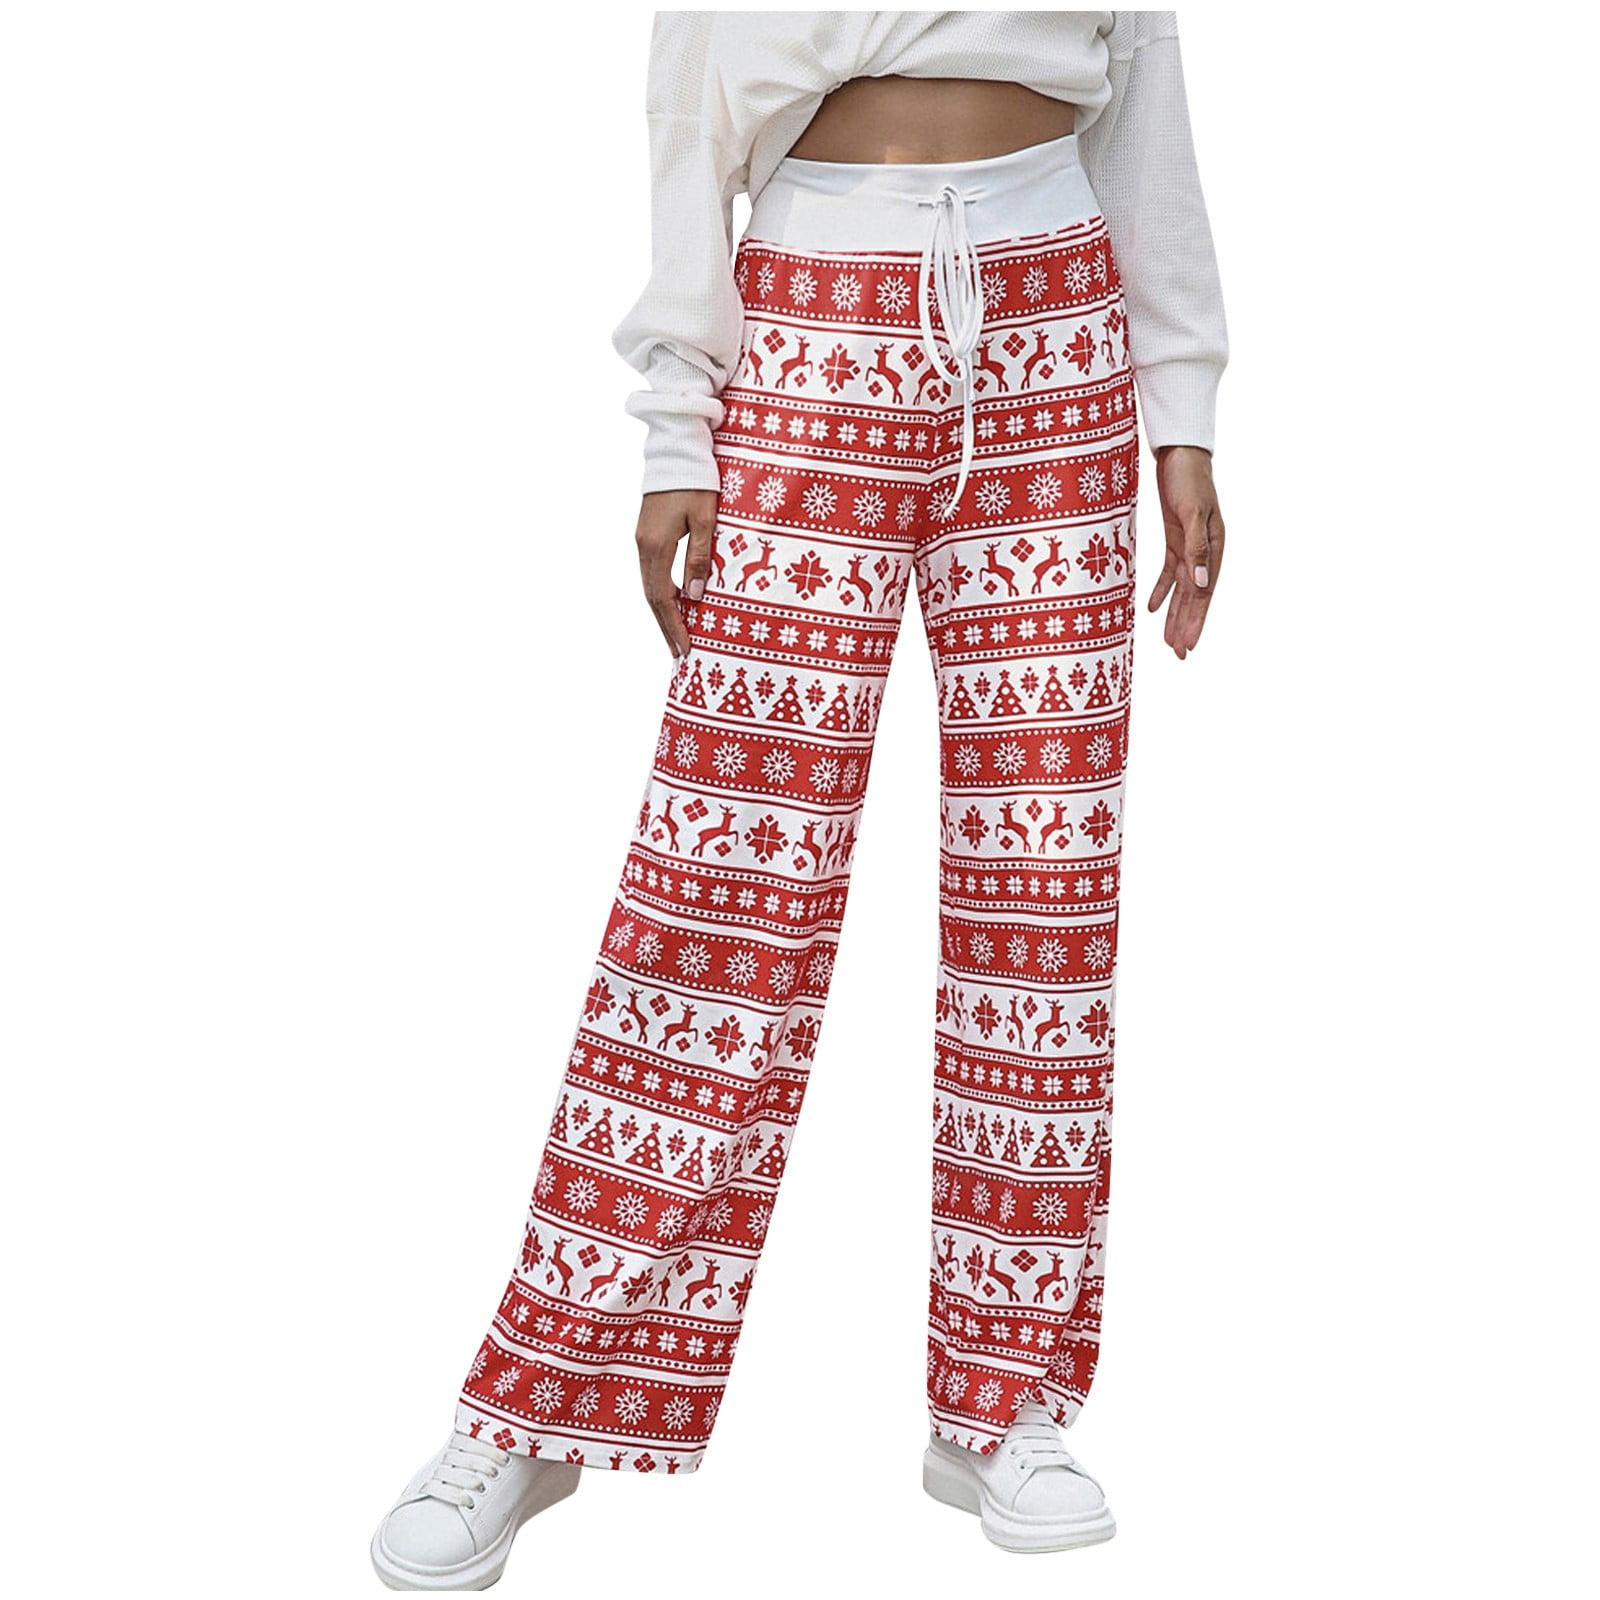 BUIgtTklOP Pants for Women Clearance,Women's Christmas Active Elastic Waist  Baggy Sweatpants Joggers Lounge Pants 